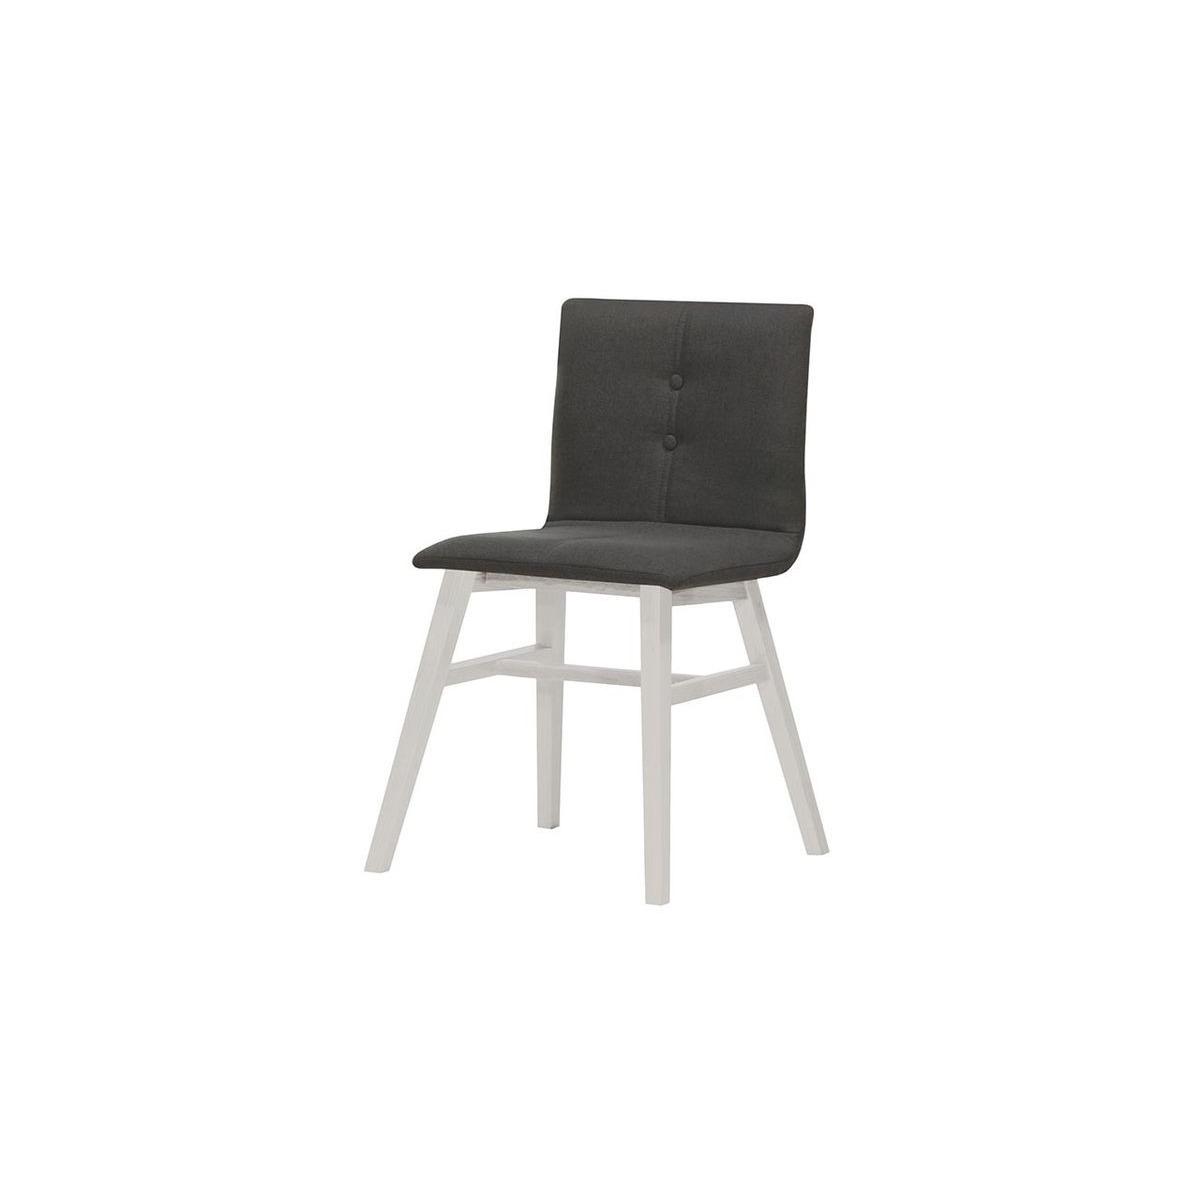 Cod Dining Chair, dark grey, Leg colour: white - image 1